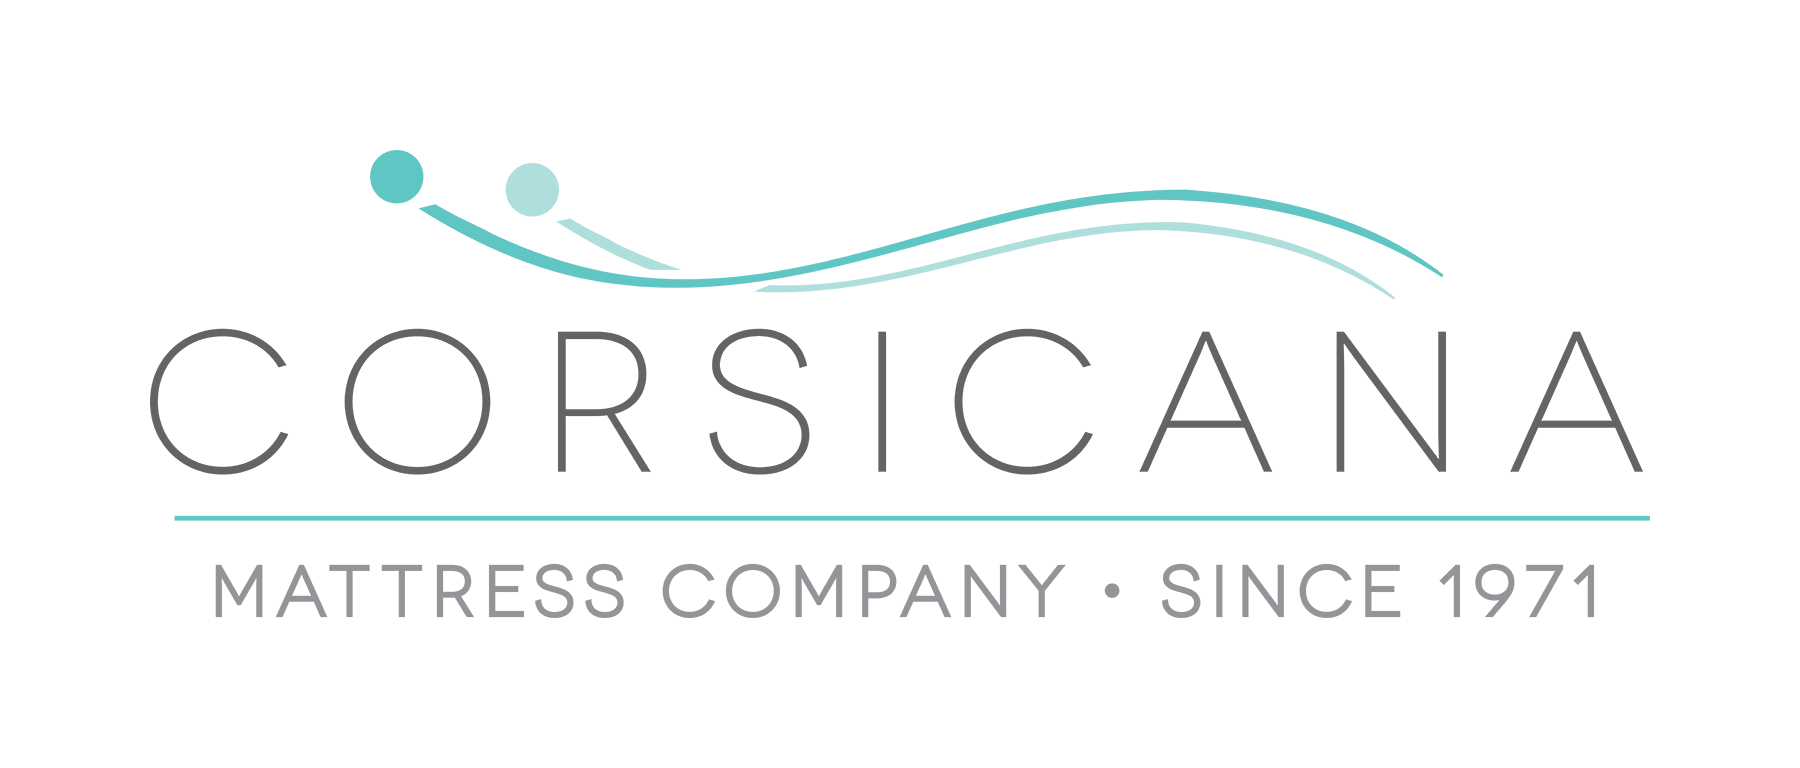 Corsicana Logo - Corsicana Bedding | Better Business Bureau® Profile